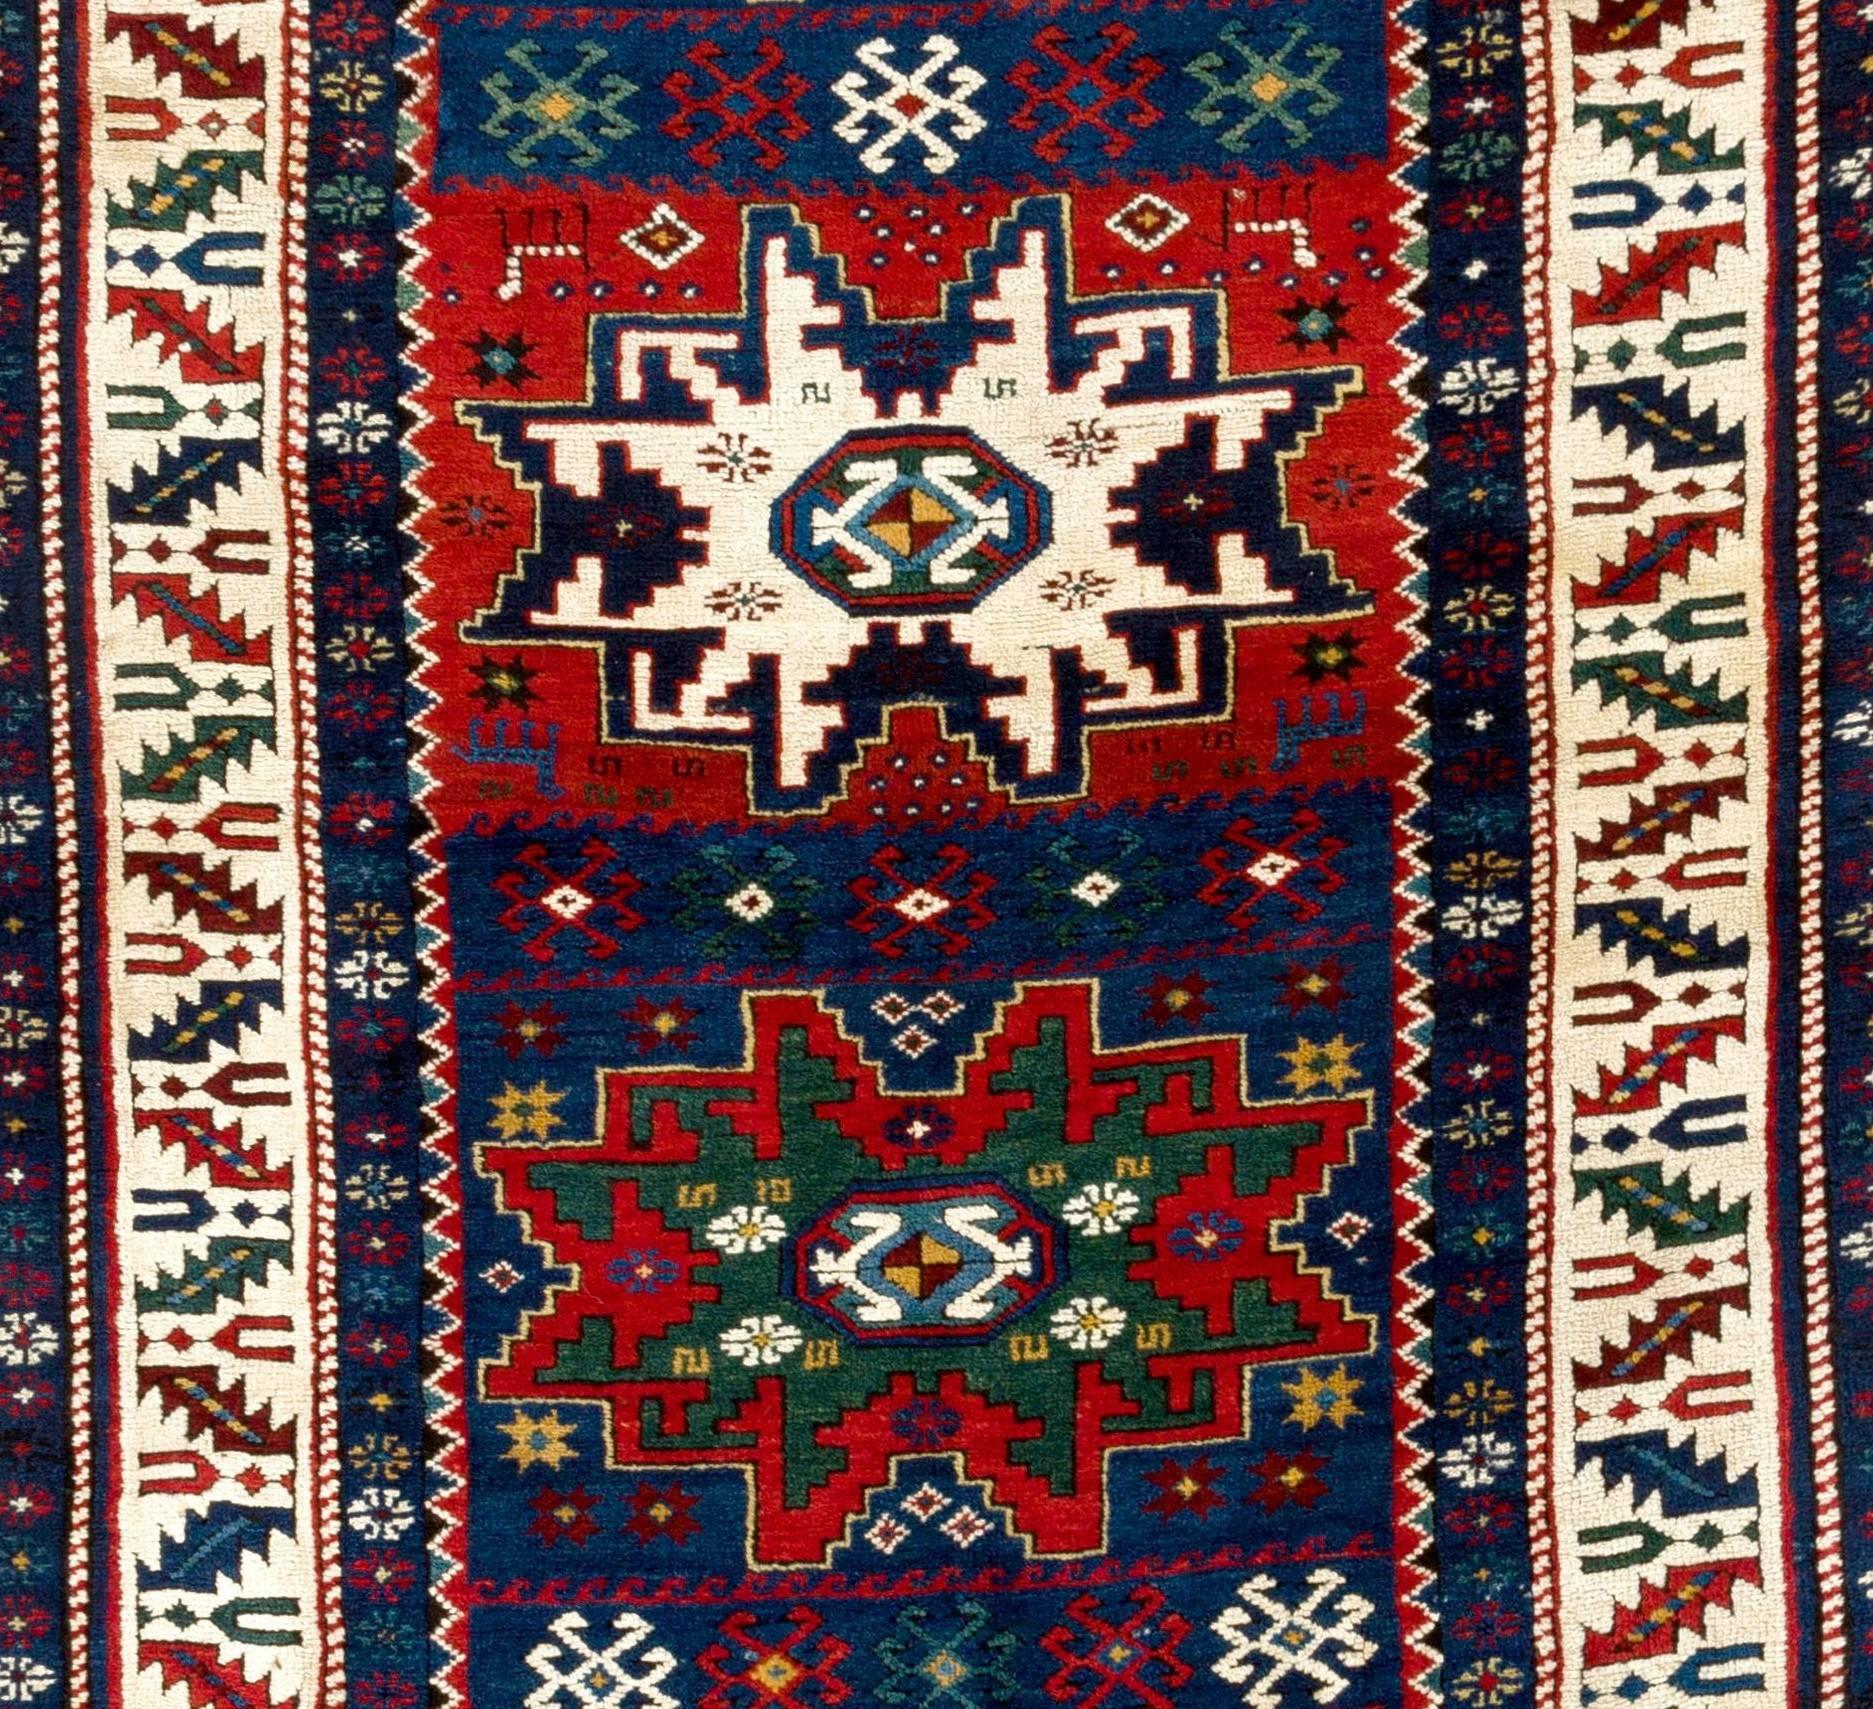 Antique Caucasian Karabagh Kazak rug with Lesghi Stars.
Full pile, all original, very good condition.
No repairs. No issues,
ca 1890. Measures: 3.7 x 8.3 ft.